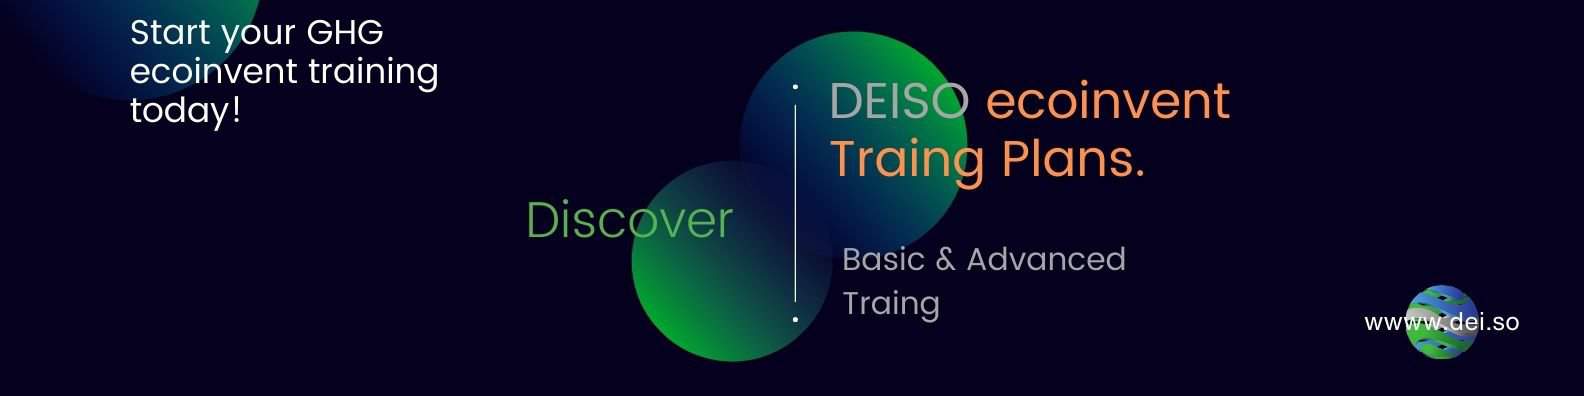 DEISO ecoinvent 培训计划和课程